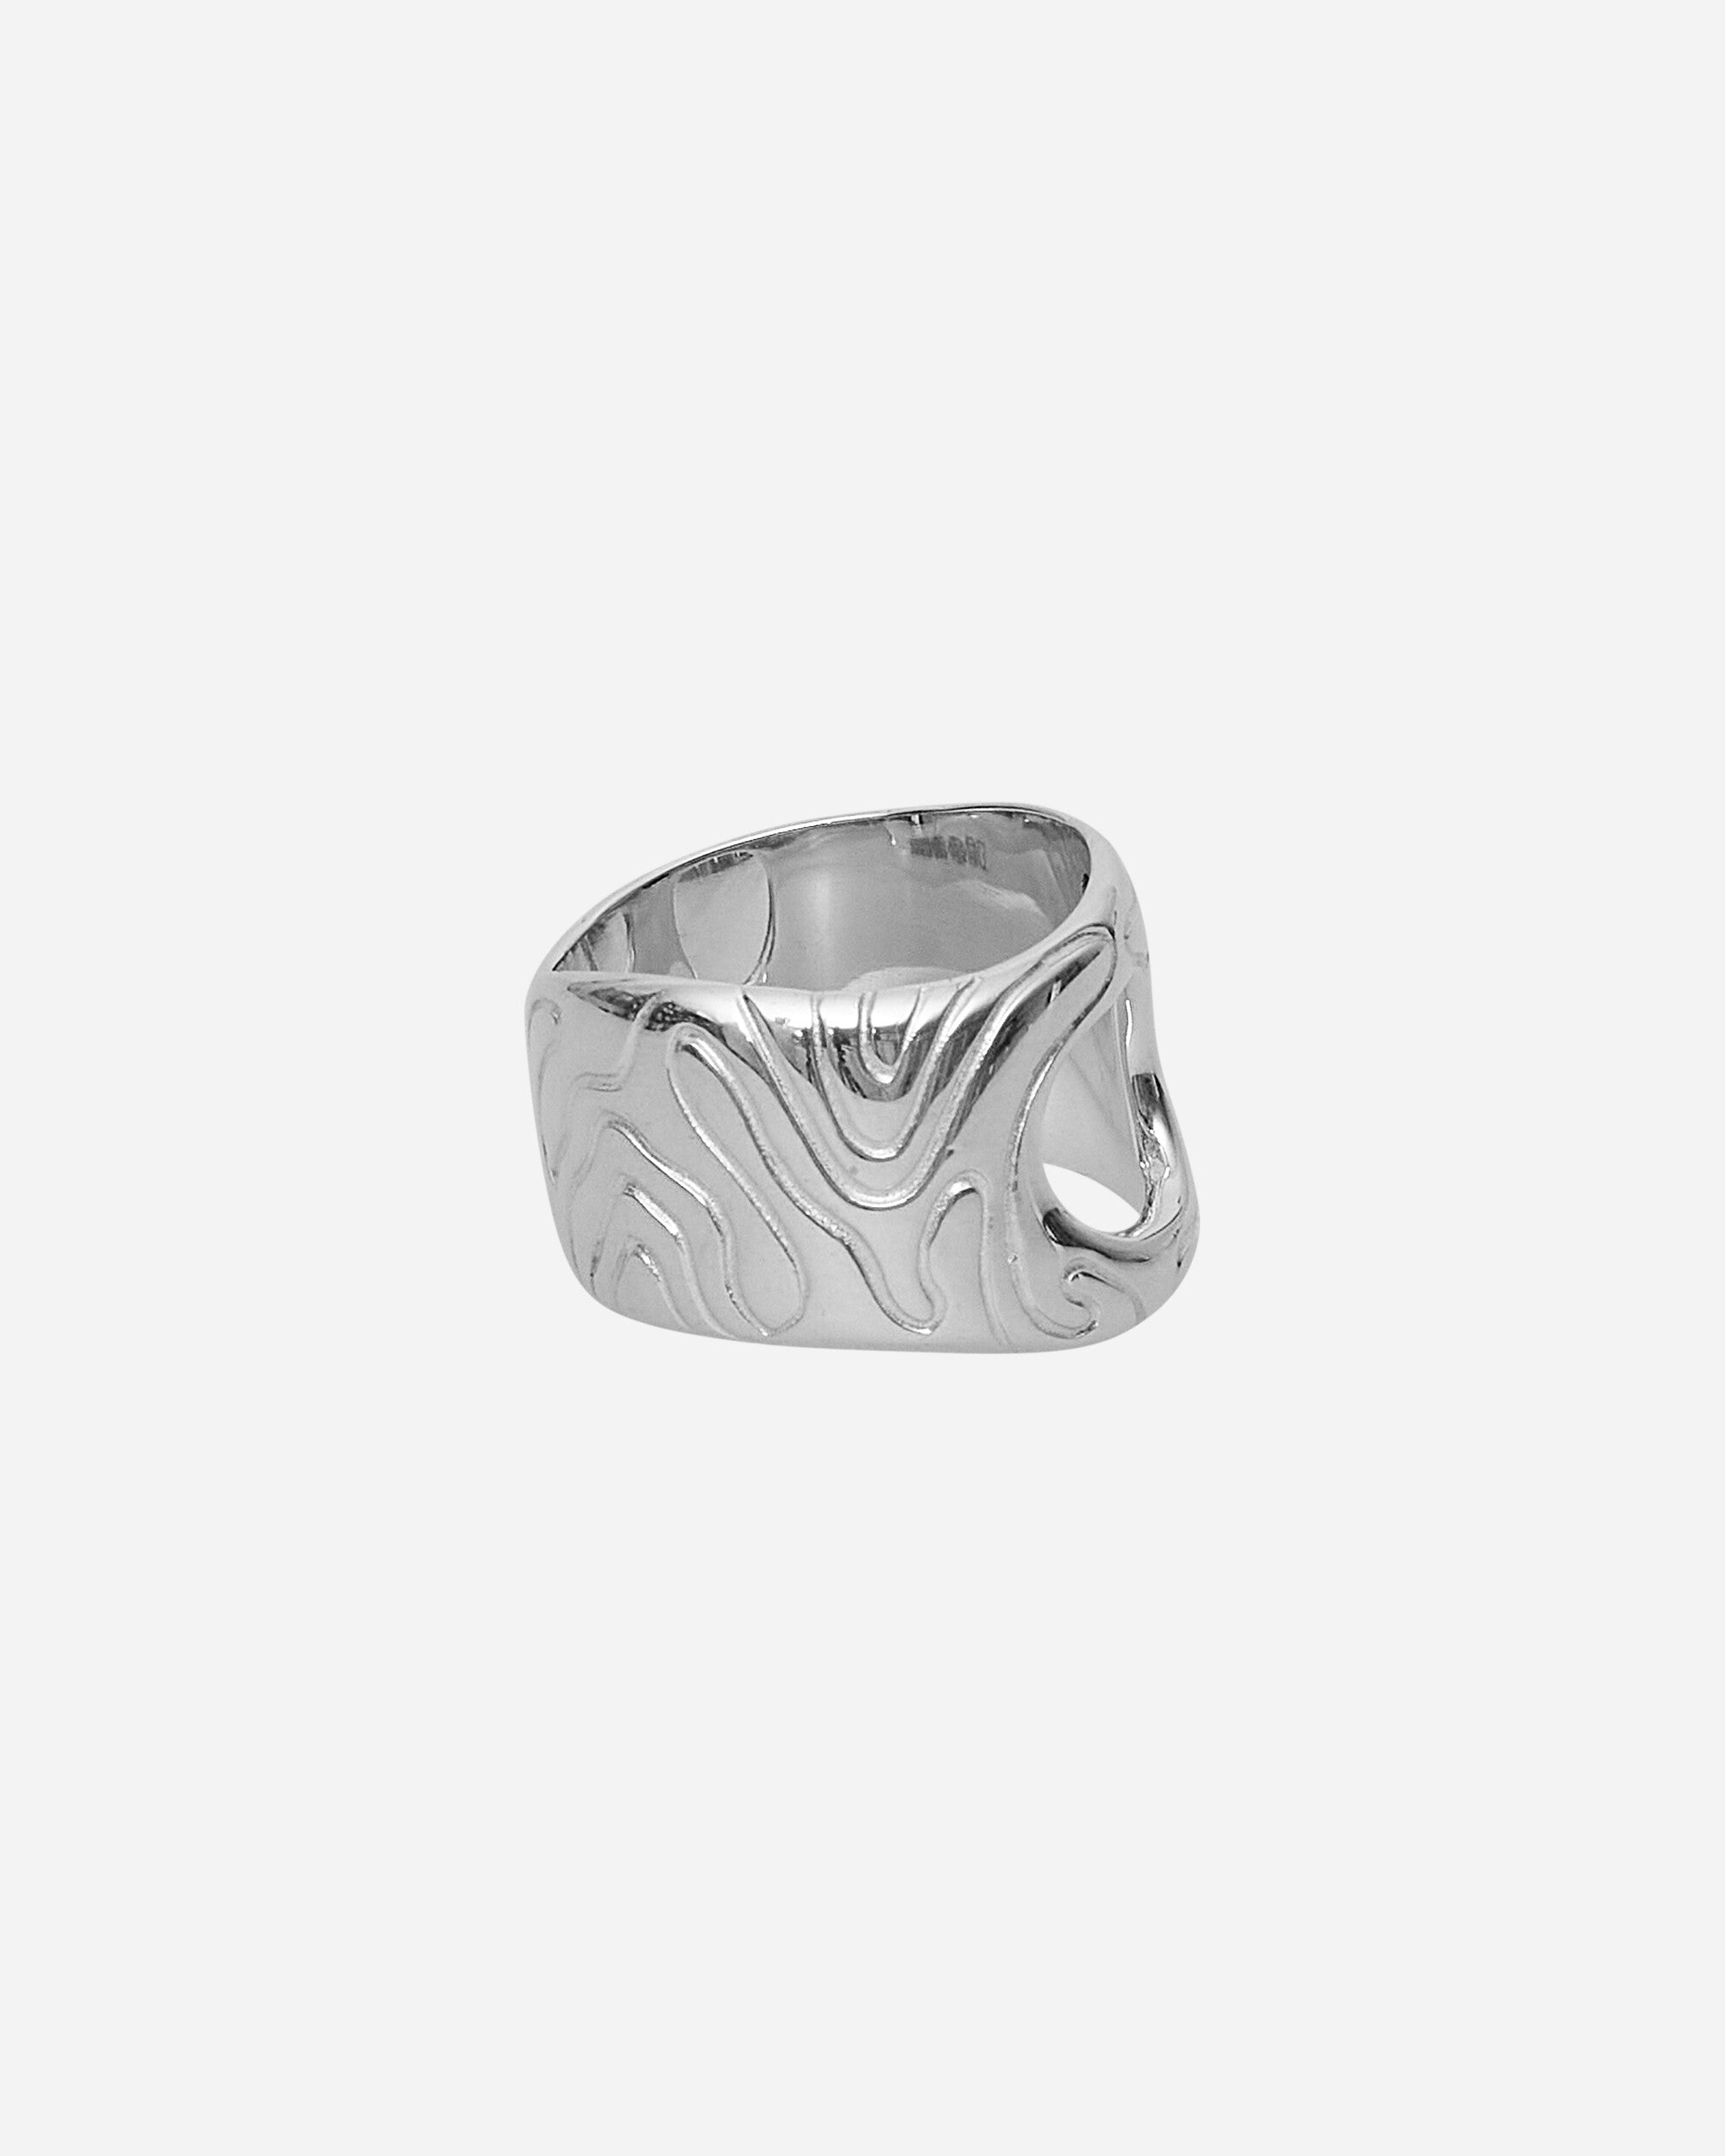 Octi Globe Ring - Slam Jam Exclusive W/ Black Sapphire Silver Jewellery Rings GLR 001